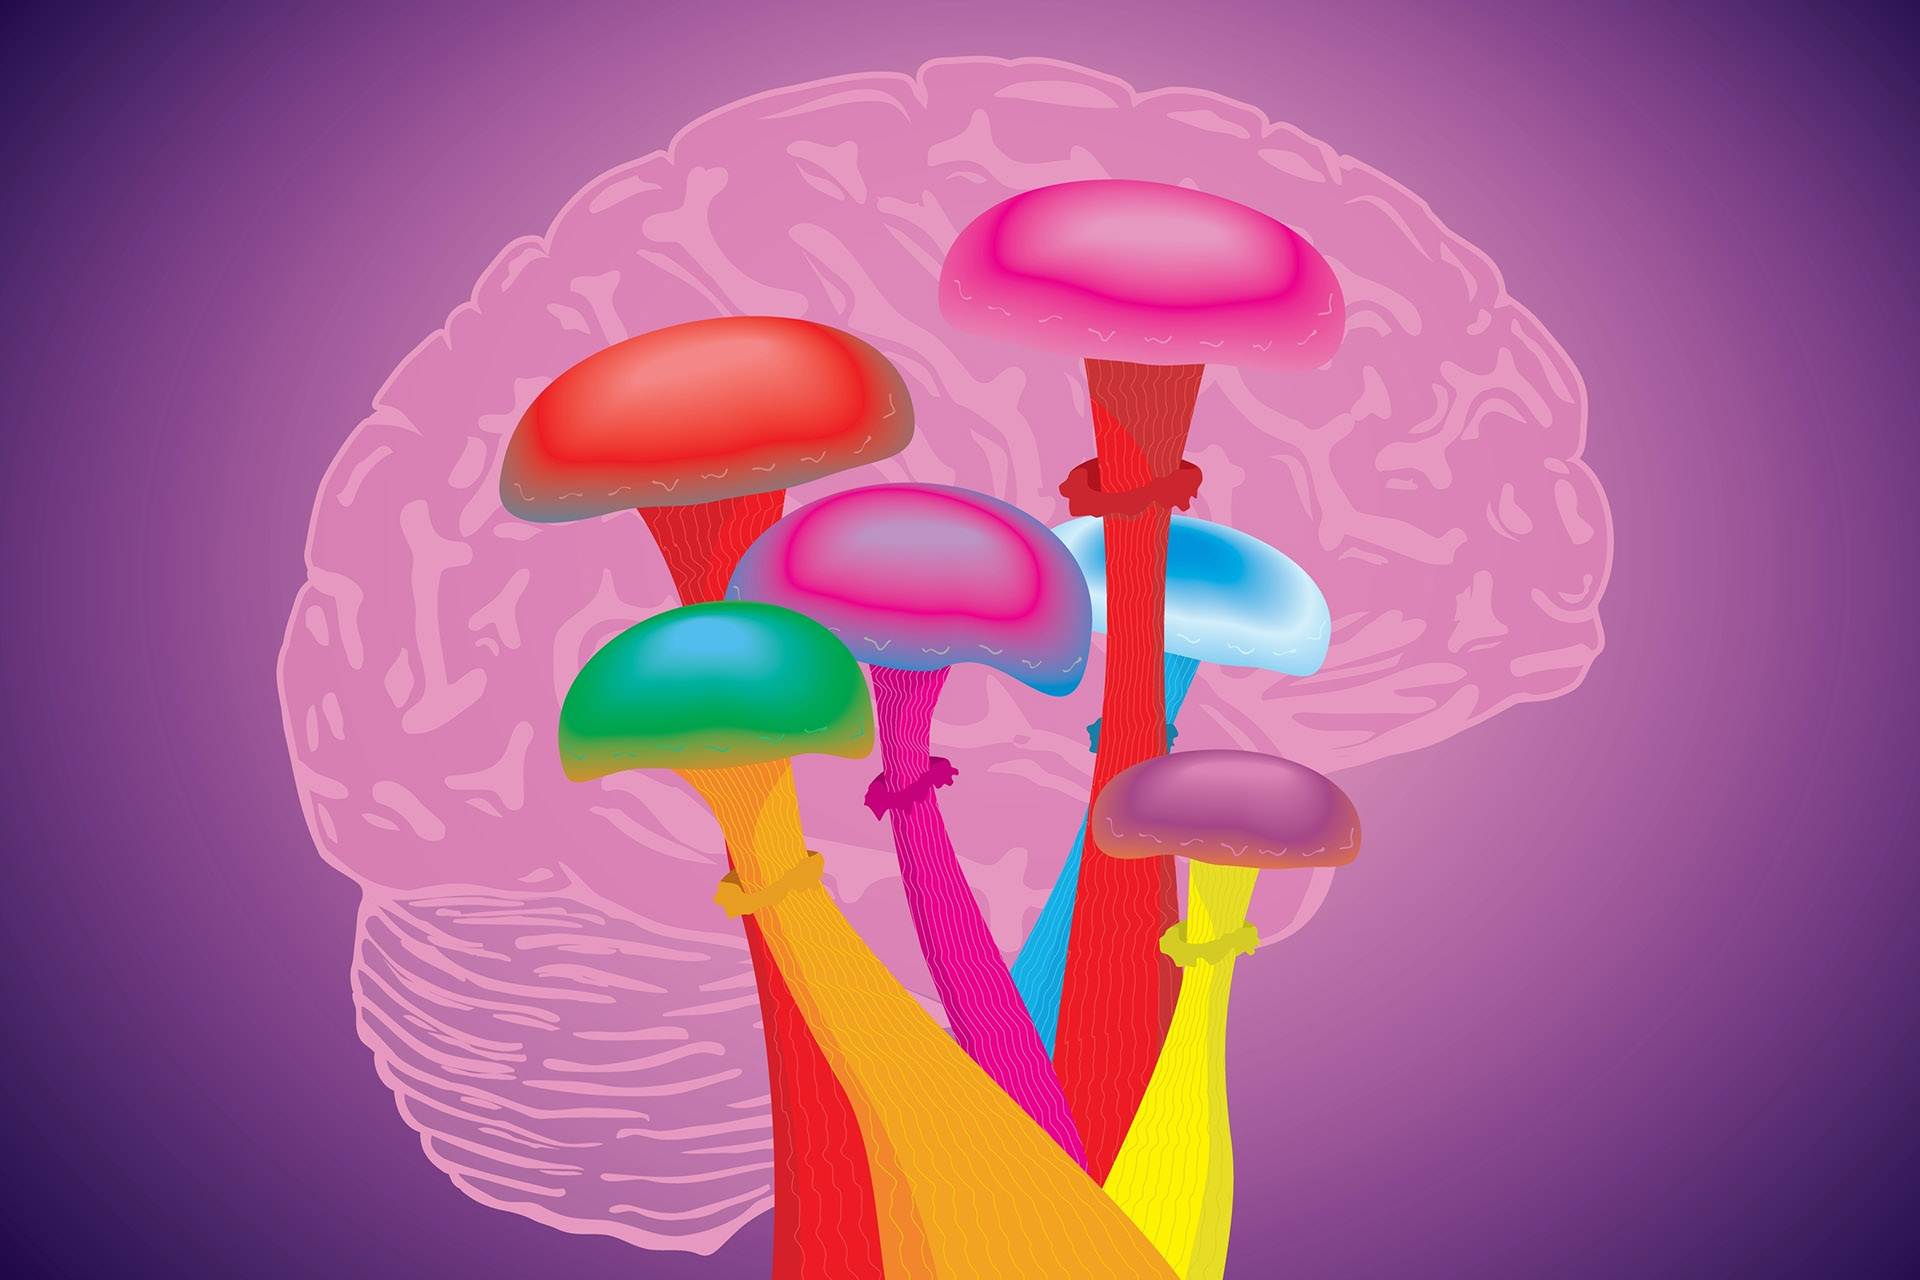 Brain image with psilocybin mushrooms